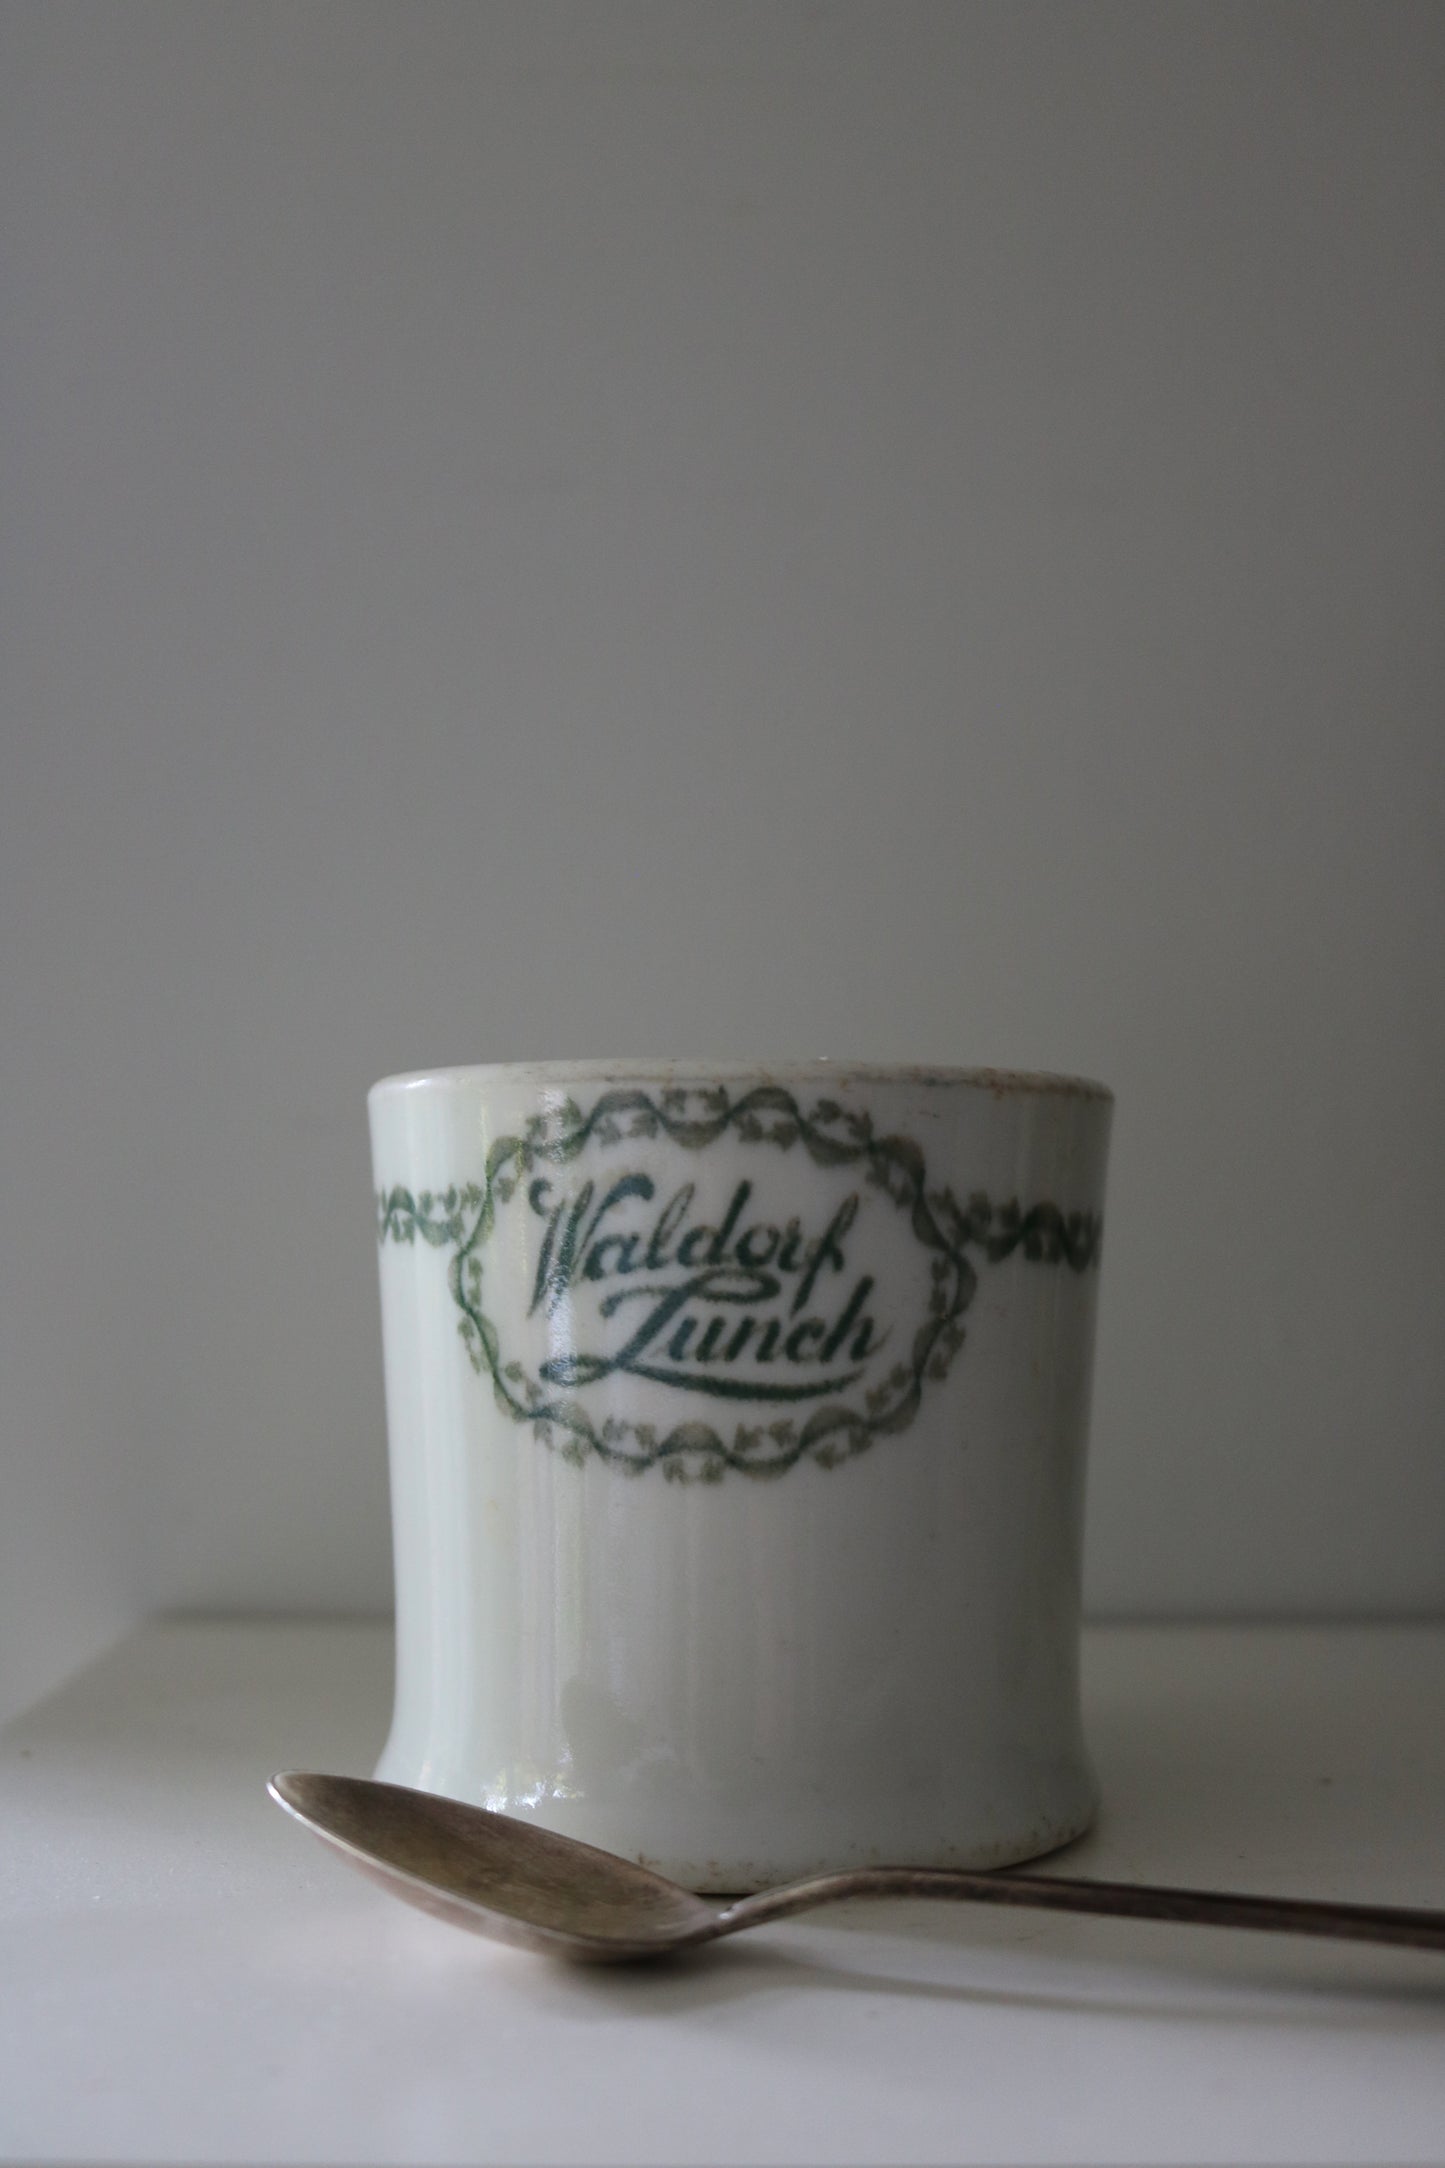 vintage ironstone restaurant ware "Waldorf Lunch" mug